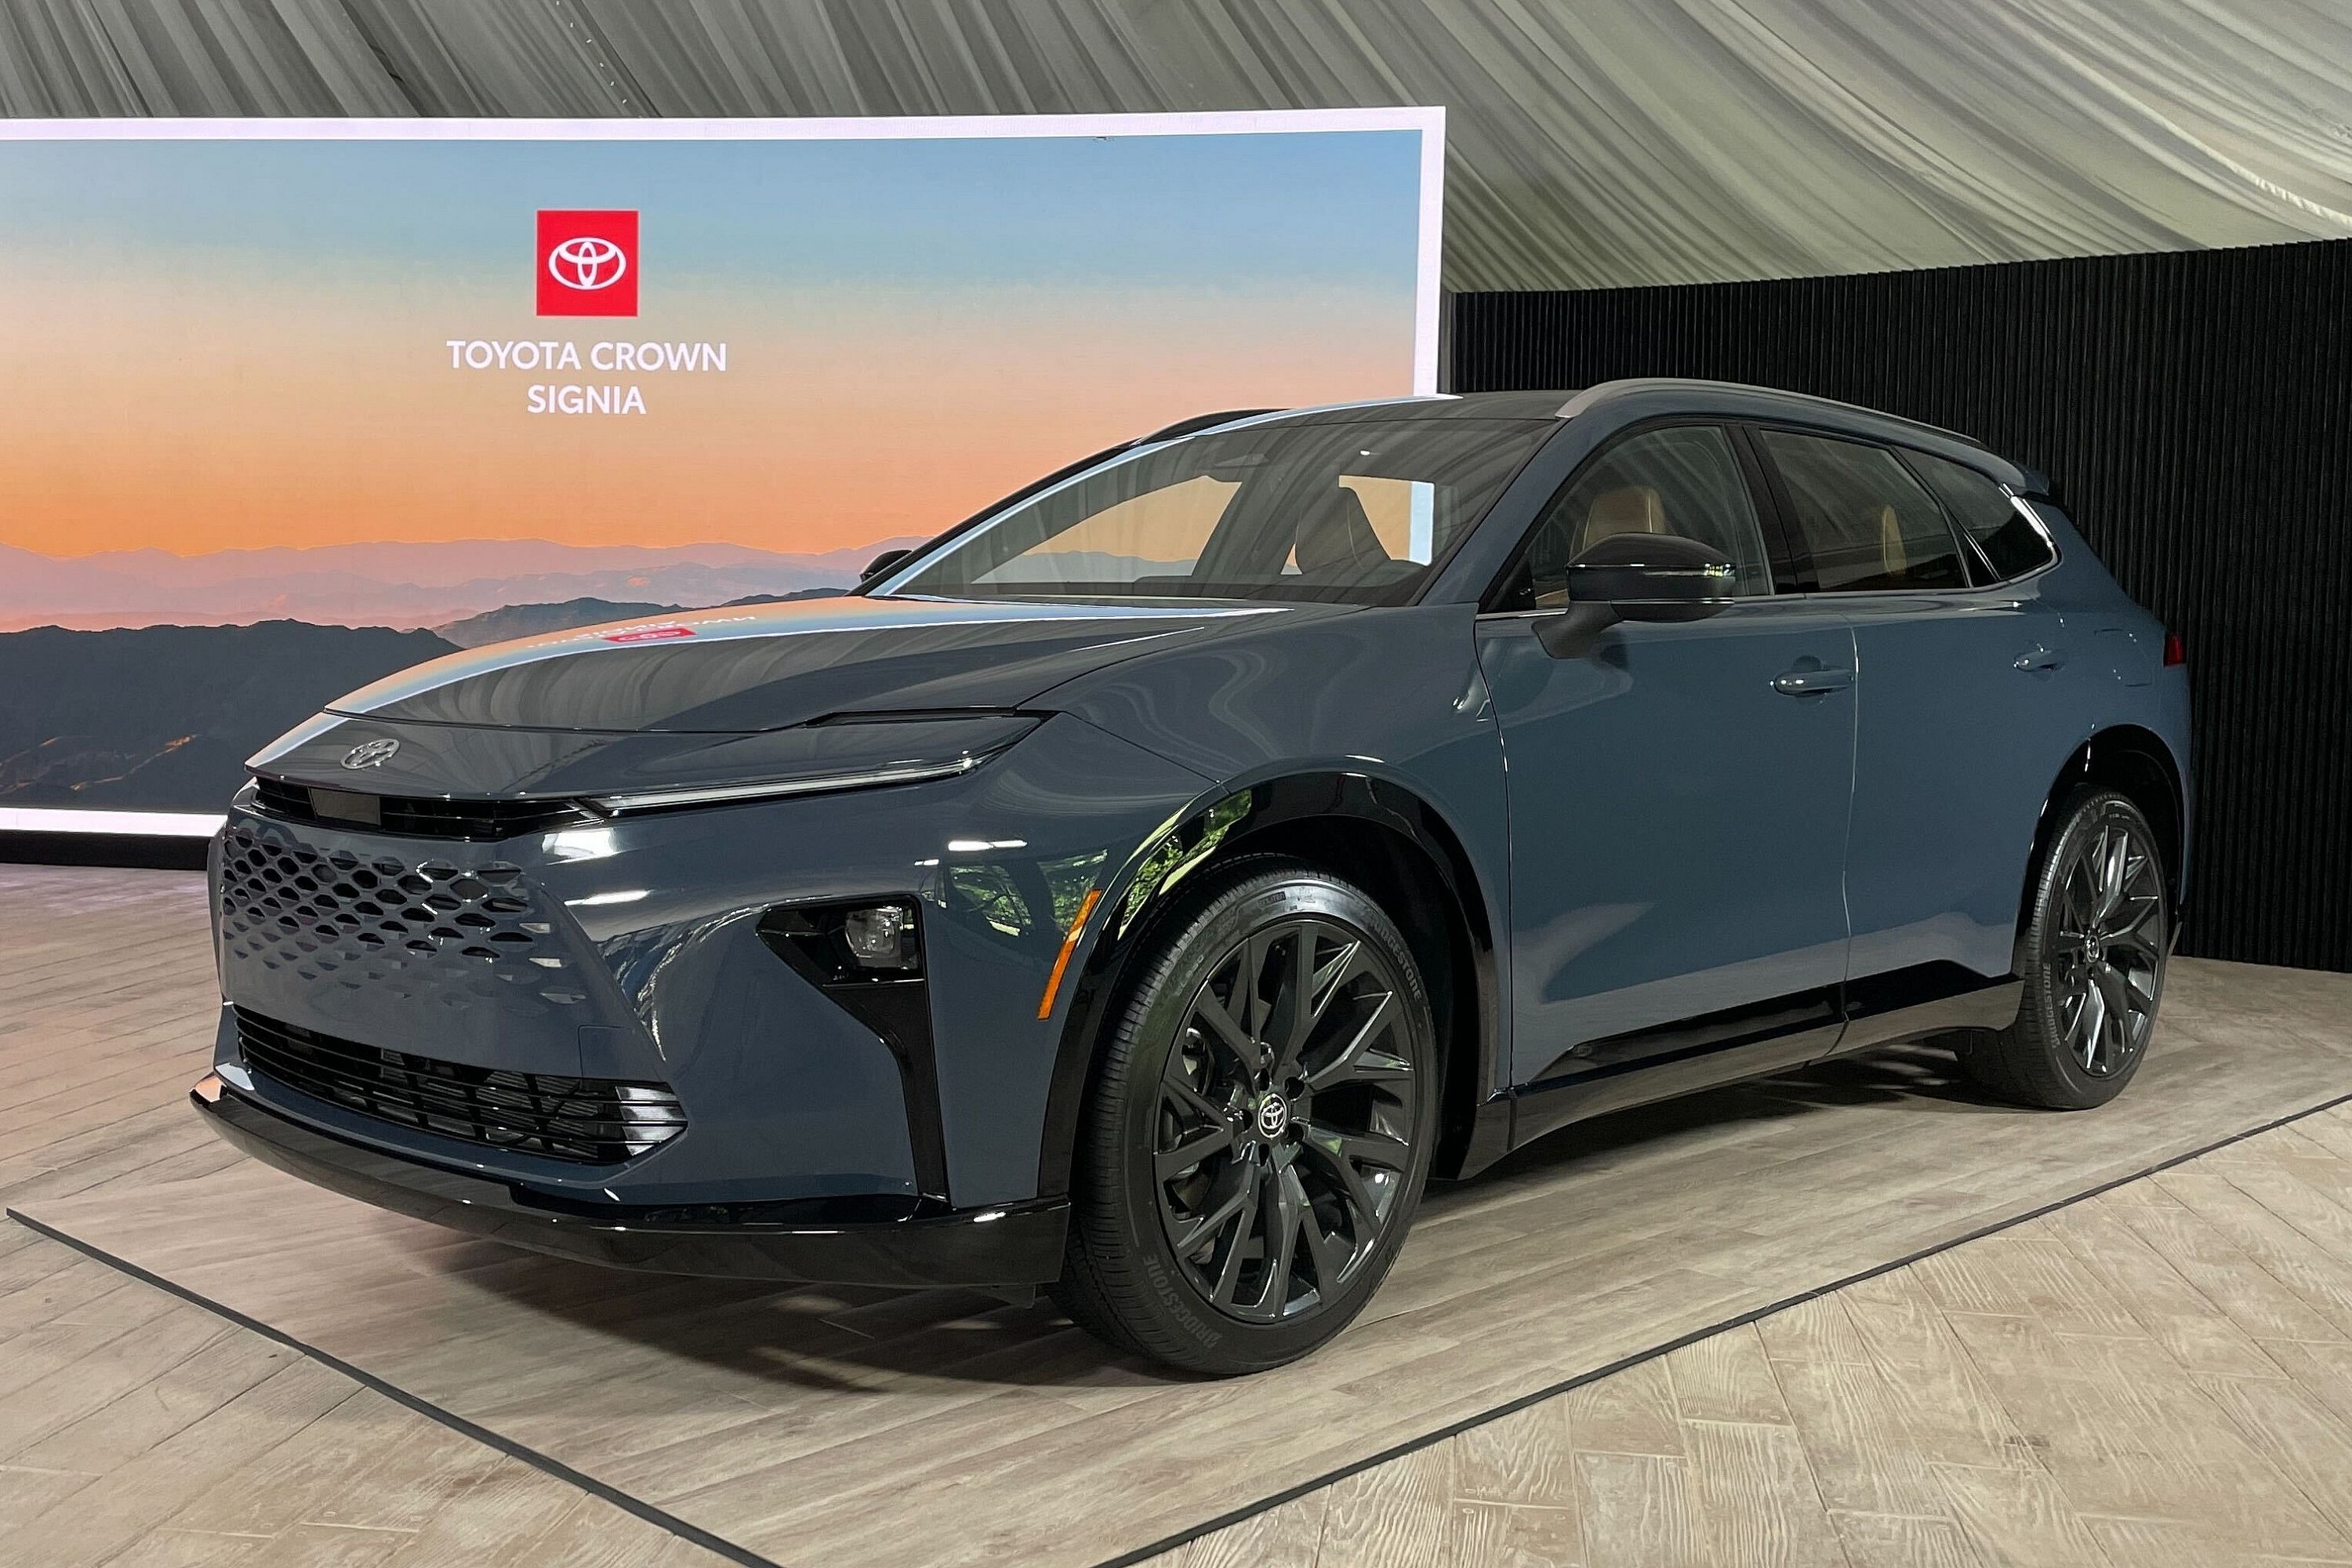 2025 Toyota Crown Signia SUV